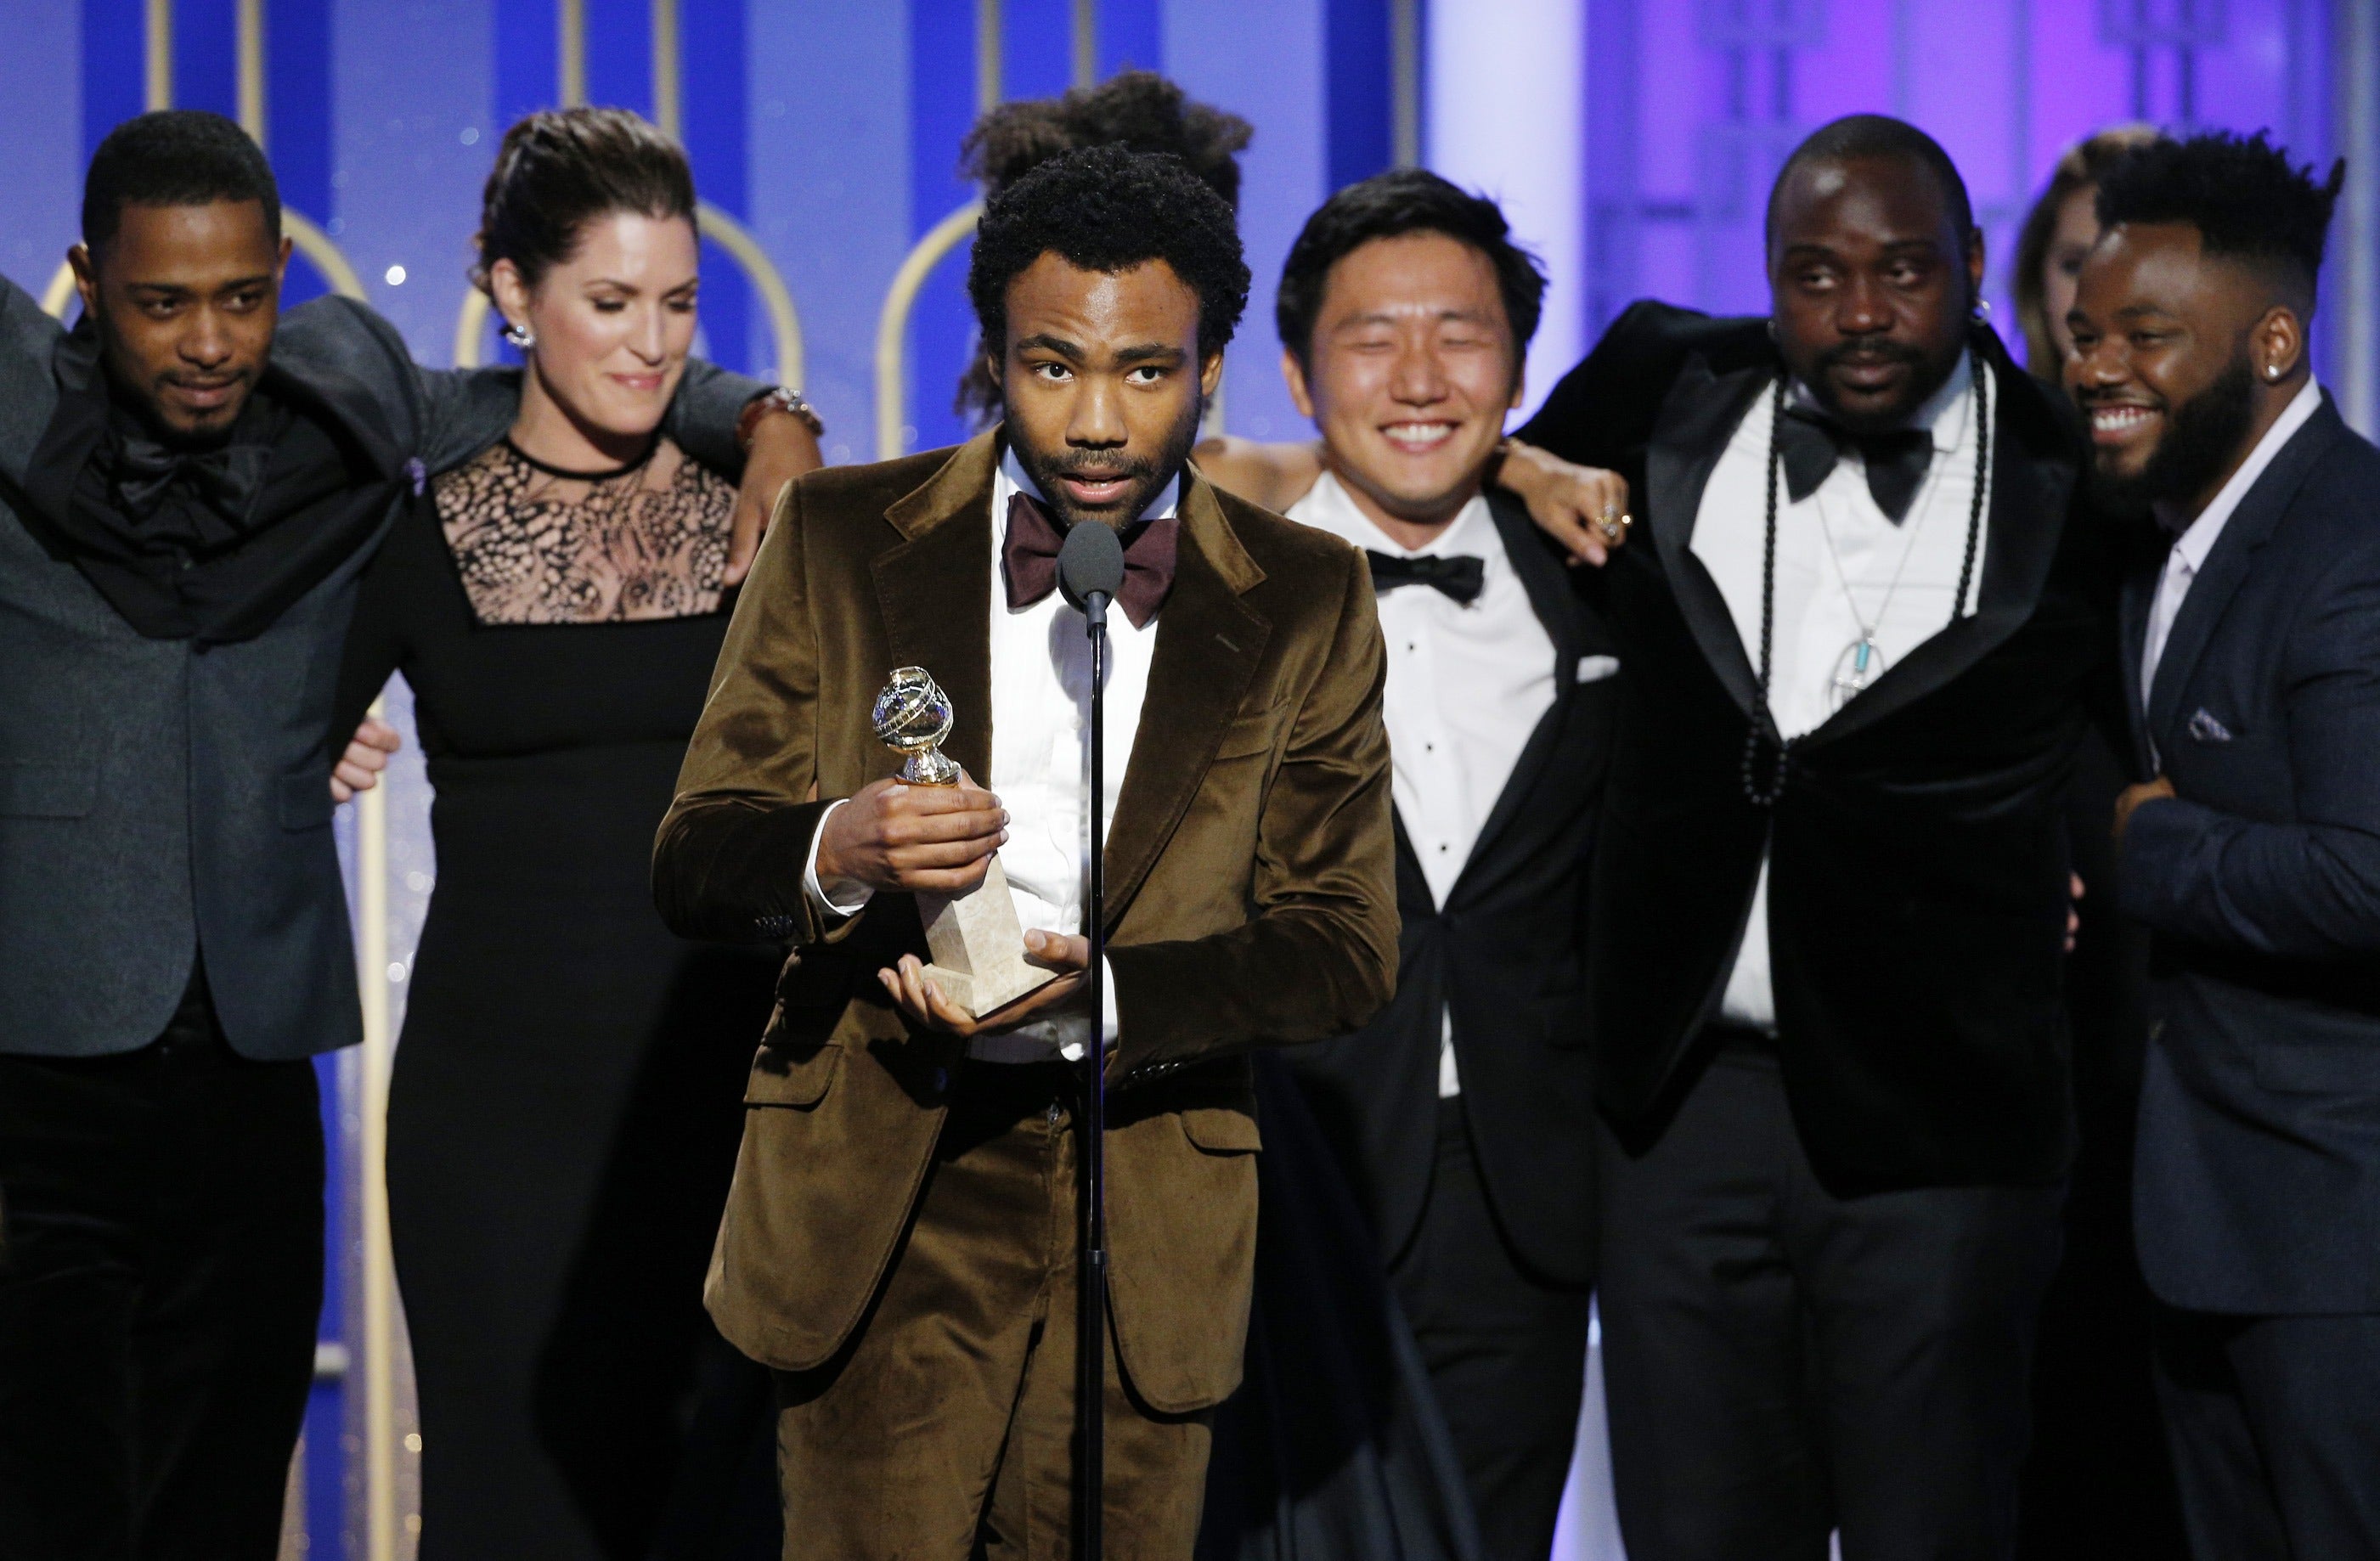 #GoldenGlobes: Donald Glover Wins Big With Best Actor Award For Atlanta